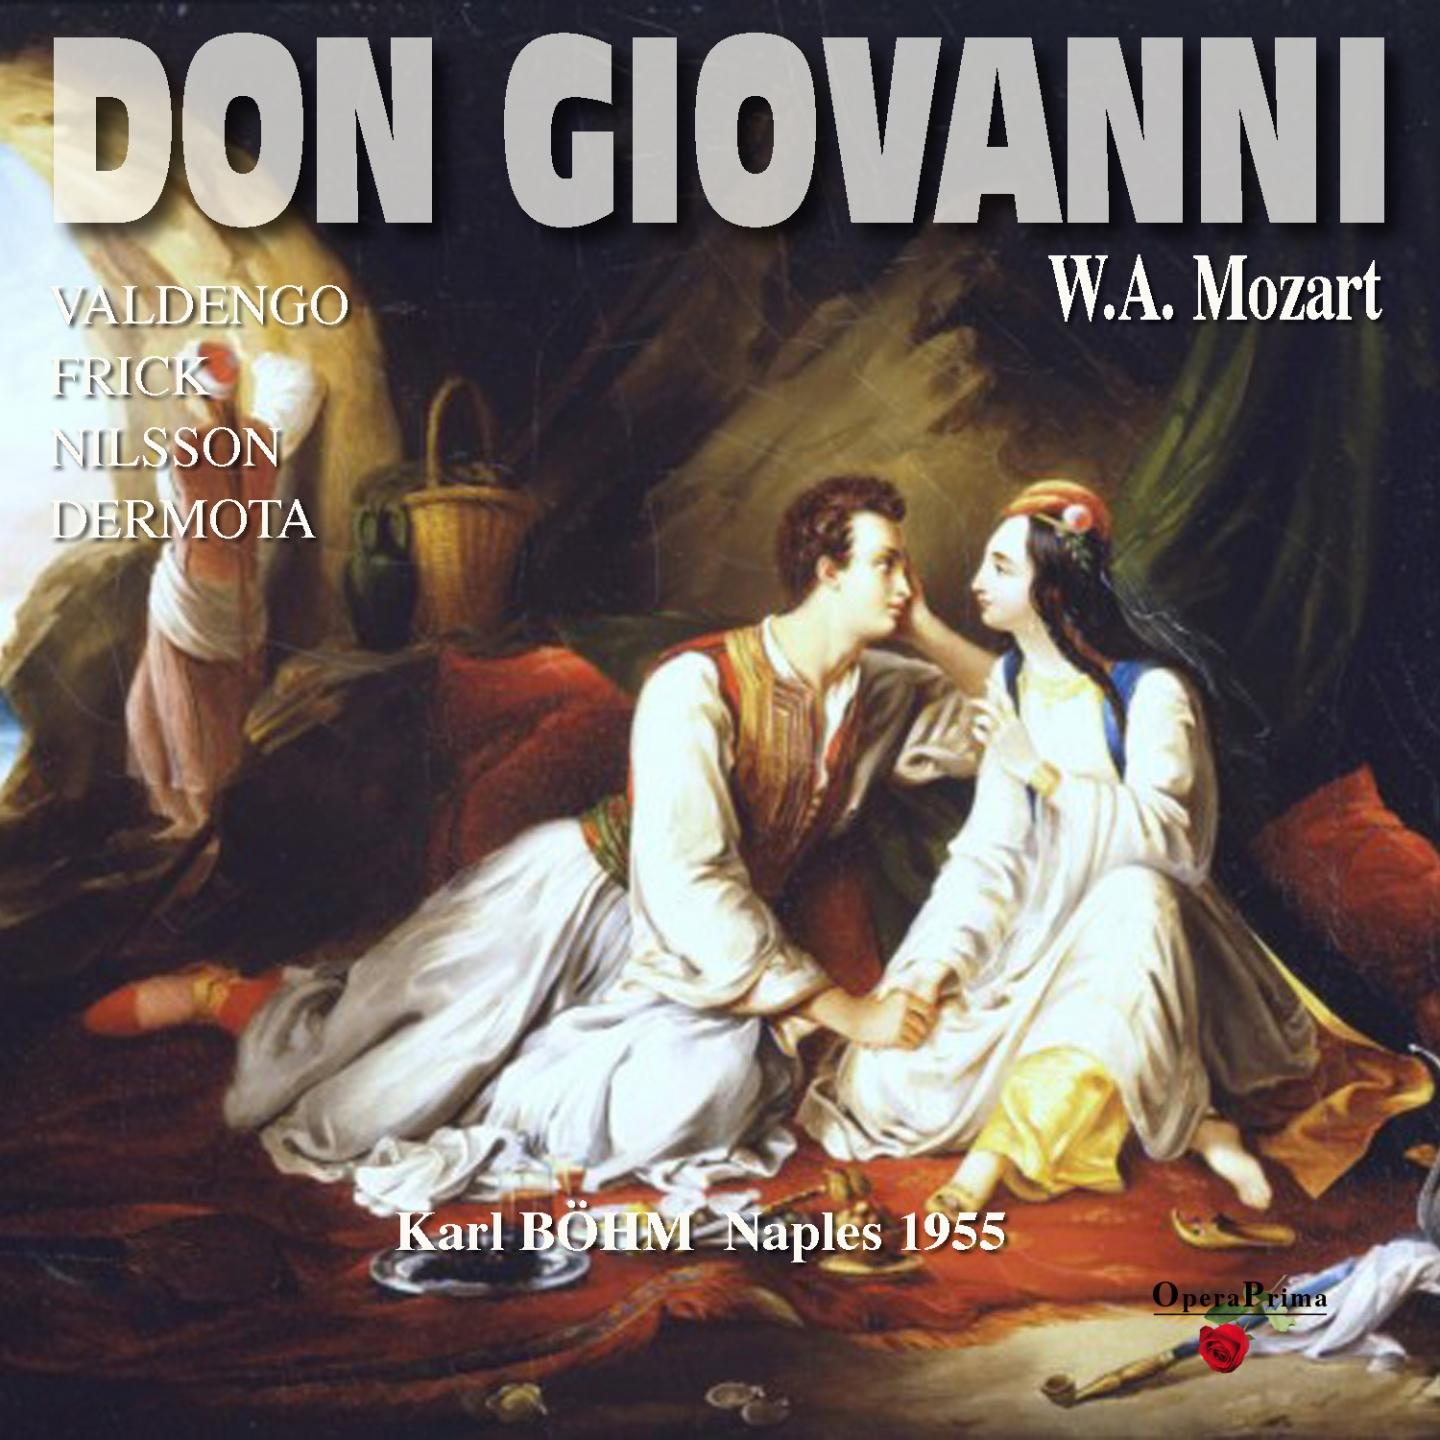 Don Giovanni: Act II - "Il mio tesoro intanio"